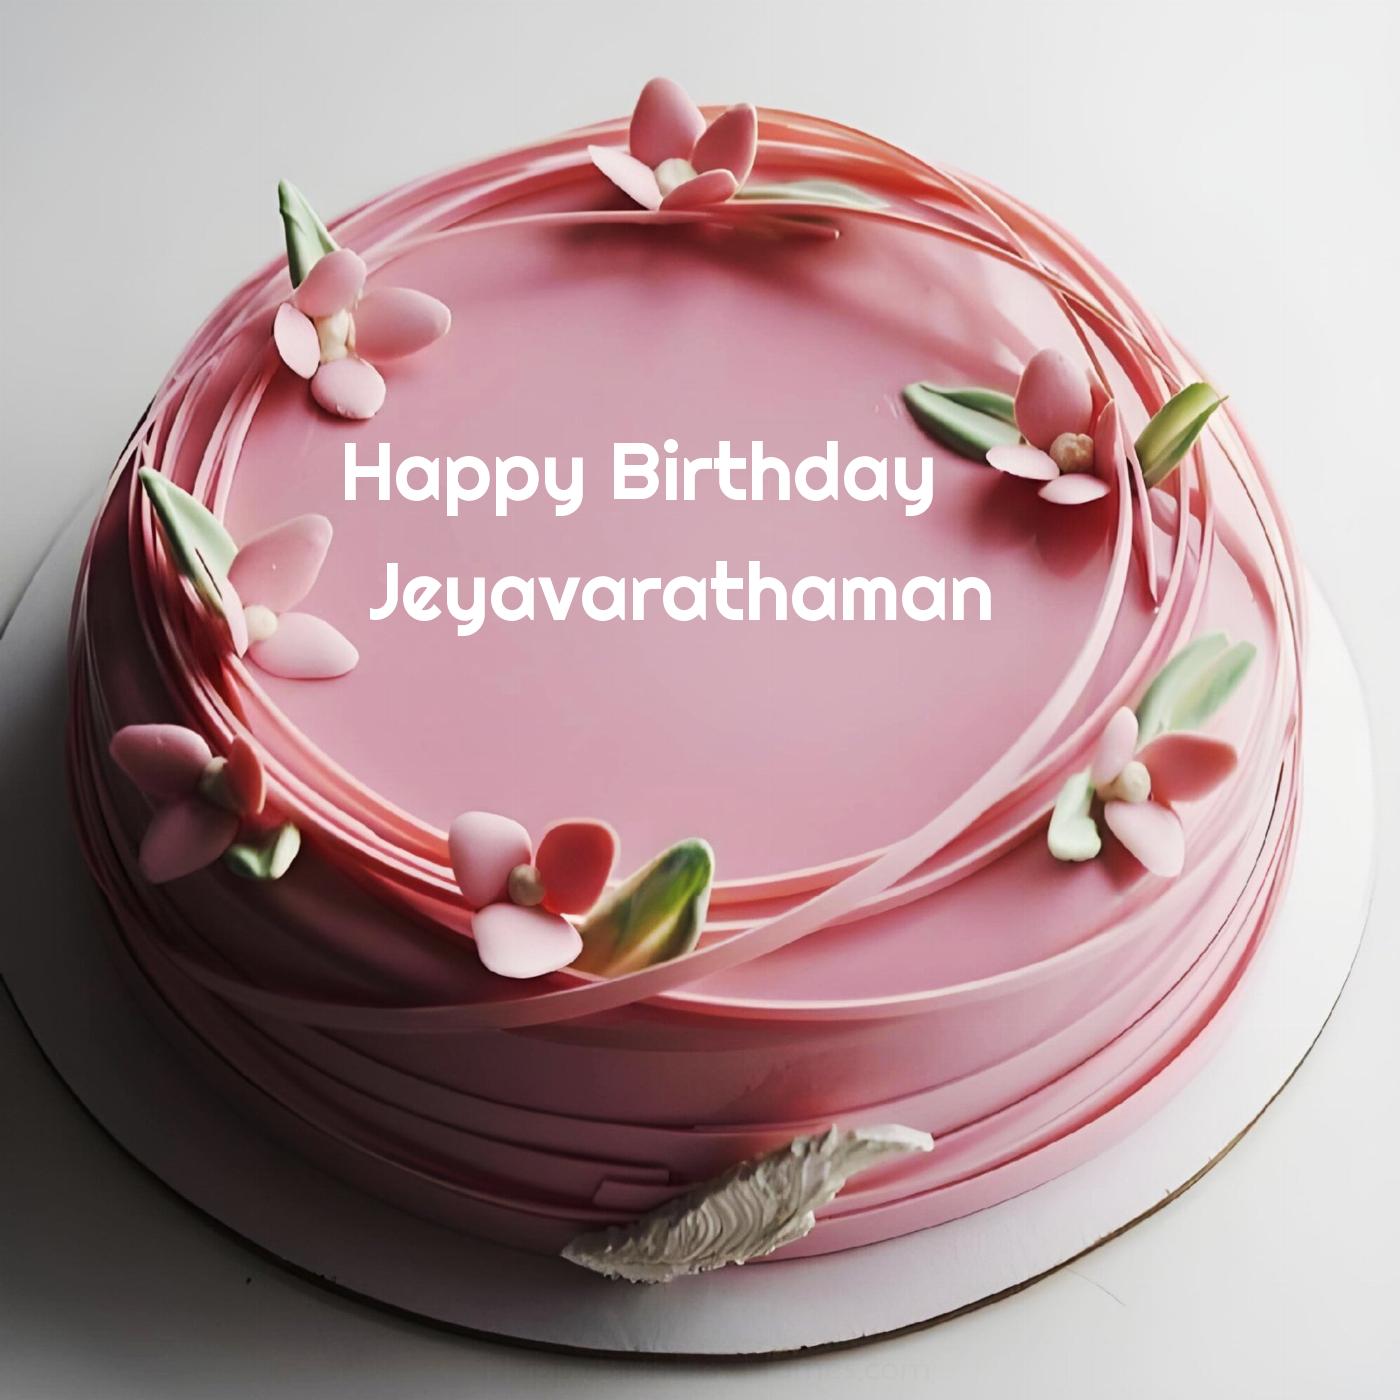 Happy Birthday Jeyavarathaman Pink Flowers Cake